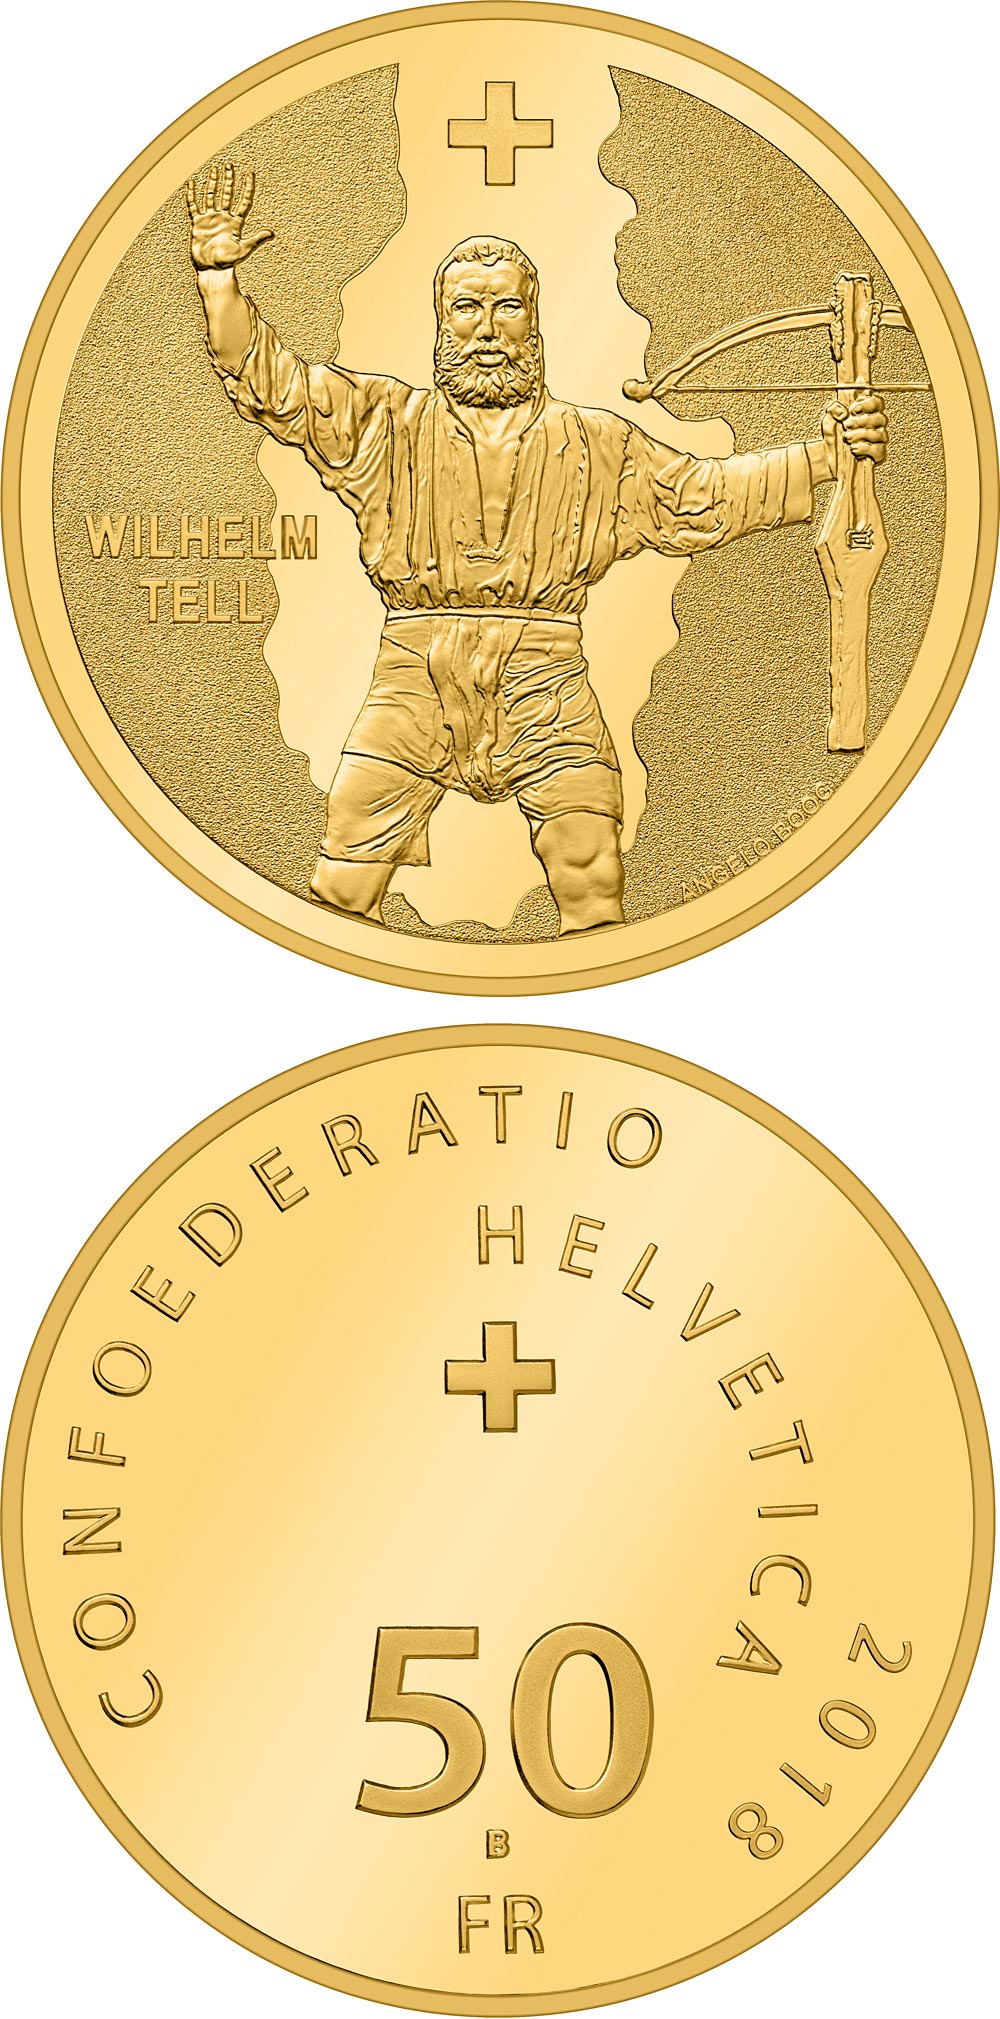 Image of 50 francs coin - Wilhelm Tell | Switzerland 2018